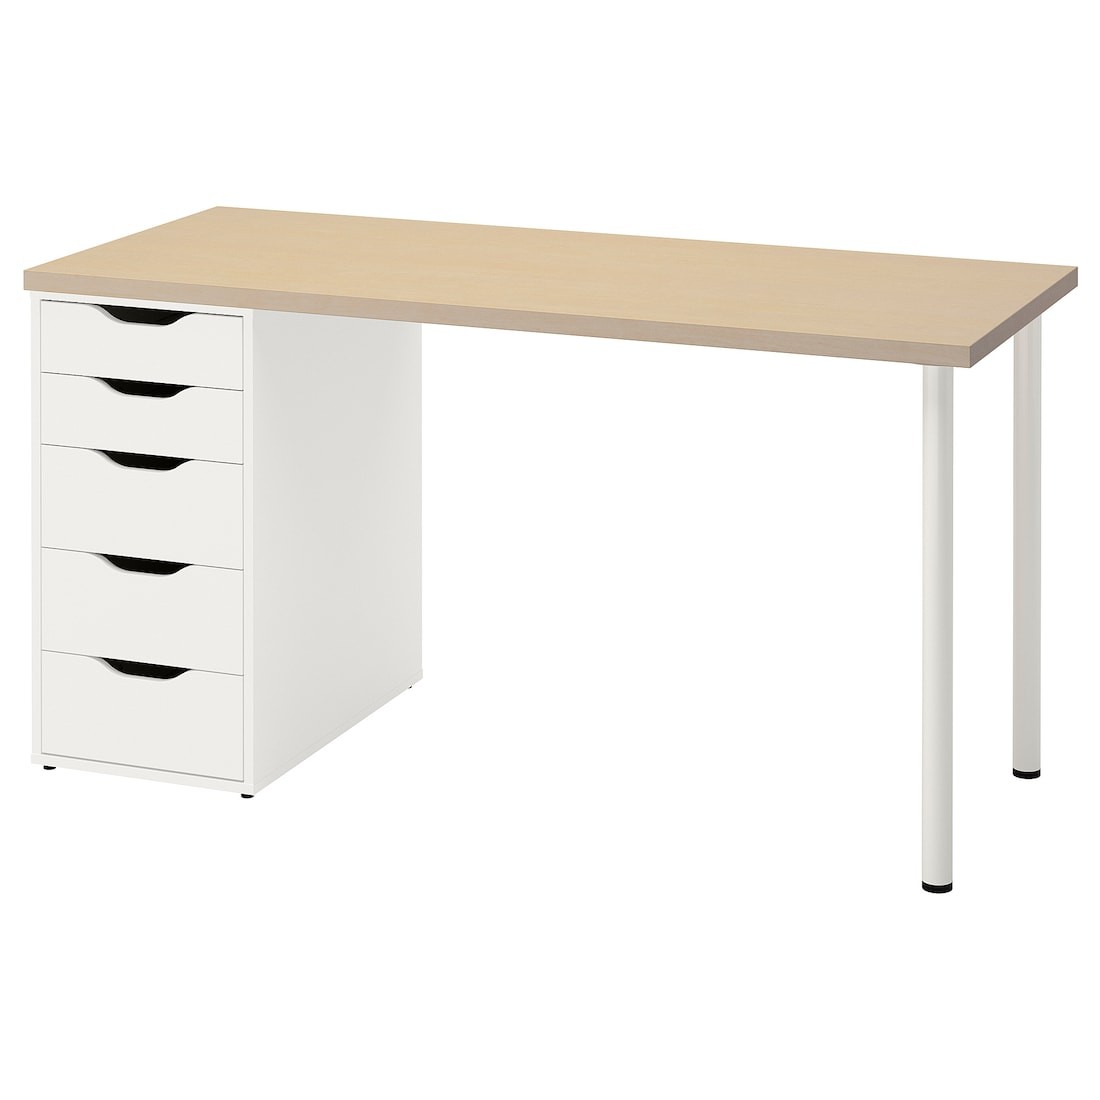 IKEA MÅLSKYTT МОЛСКЮТТ / ALEX АЛЕКС Письменный стол, береза / белый, 140x60 см 79417802 794.178.02